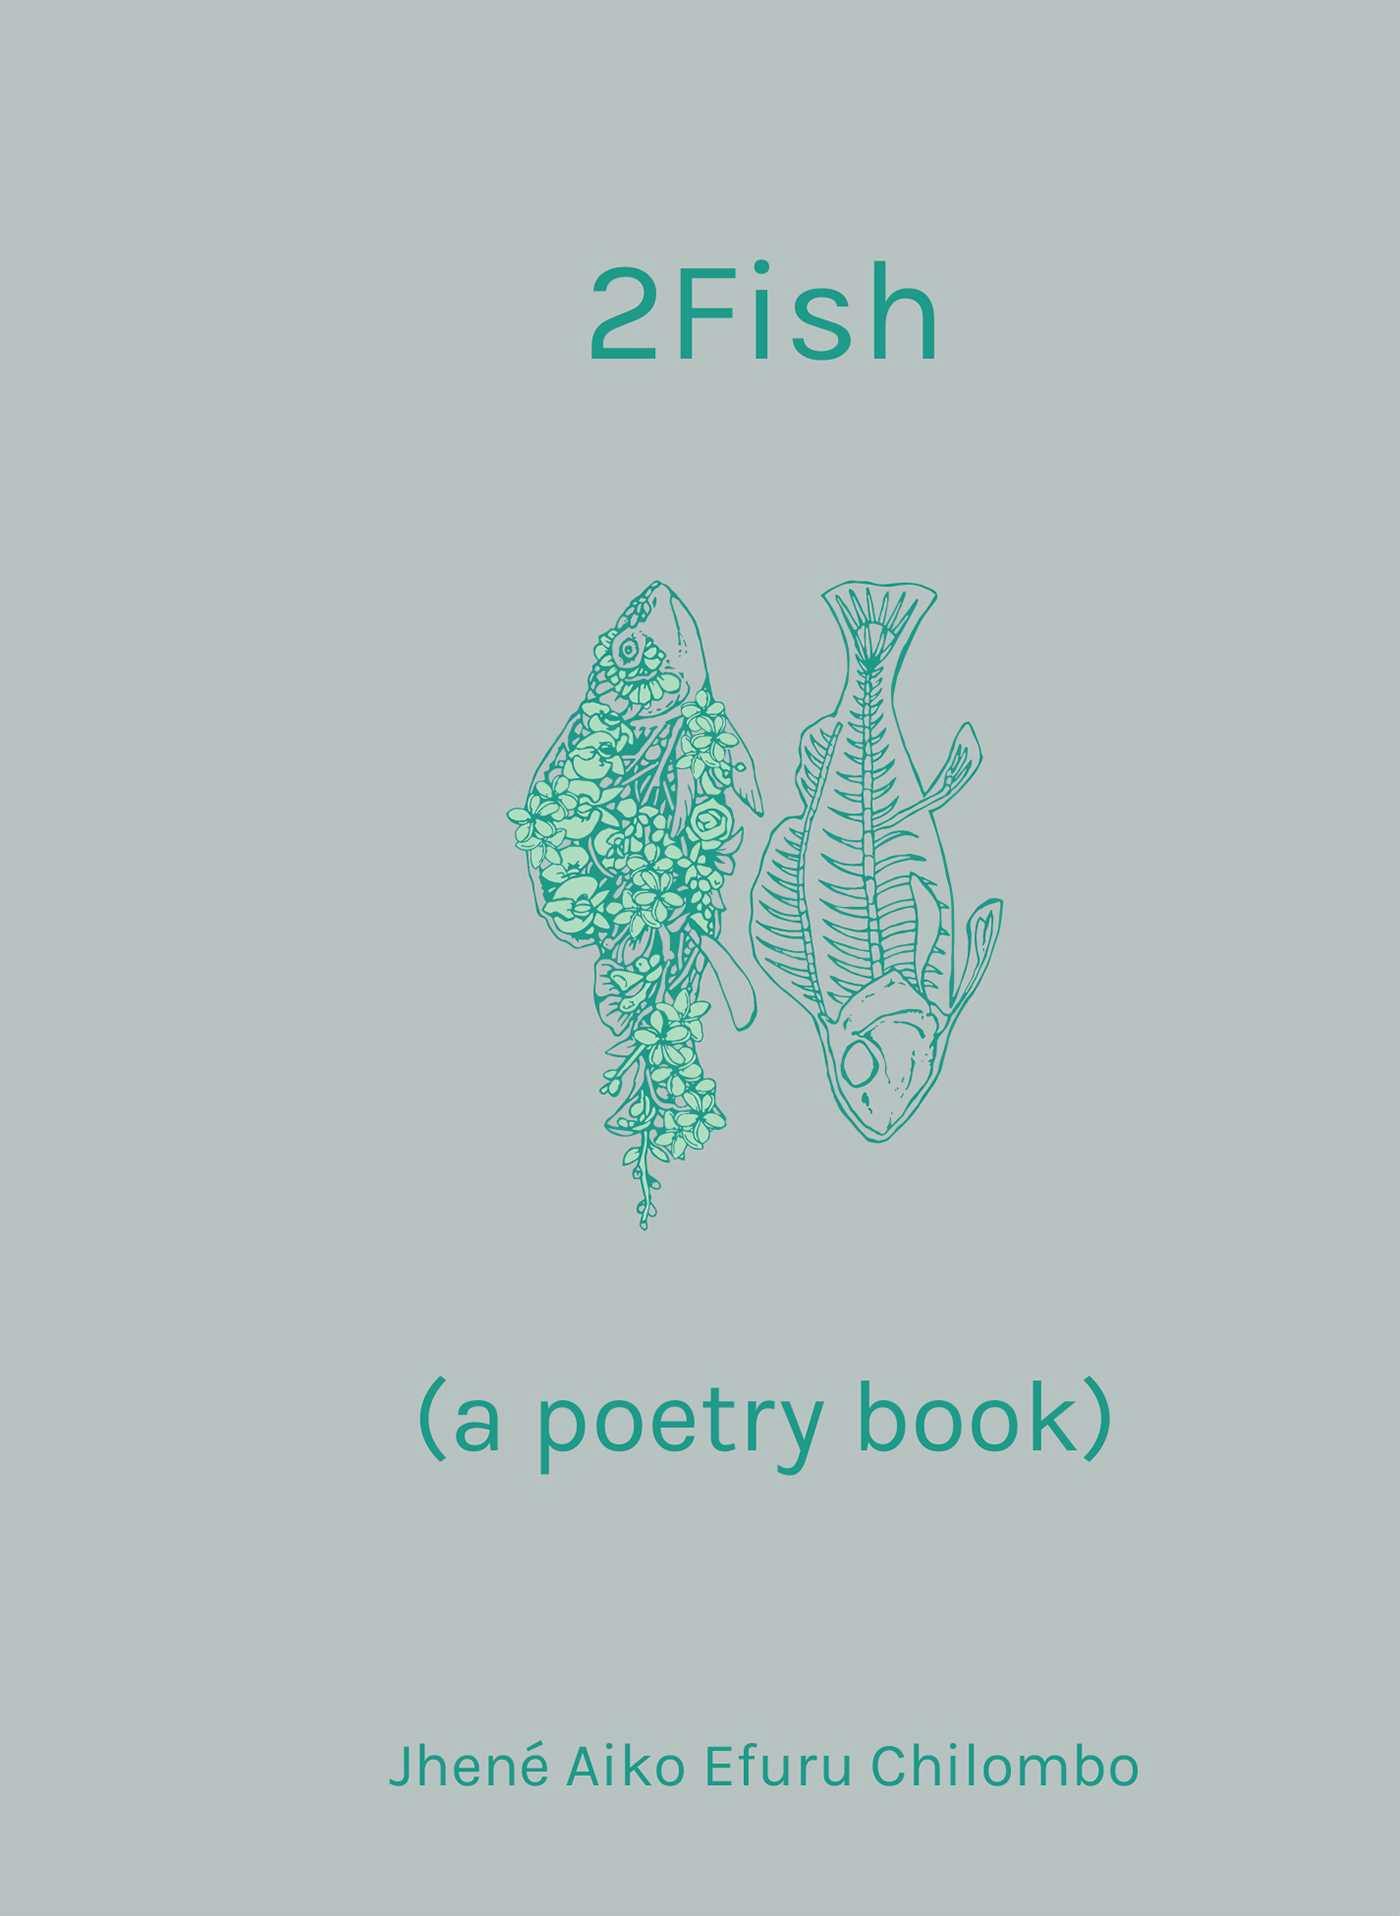 2Fish: (a poetry book) - Jhené Aiko Efuru Chilombo